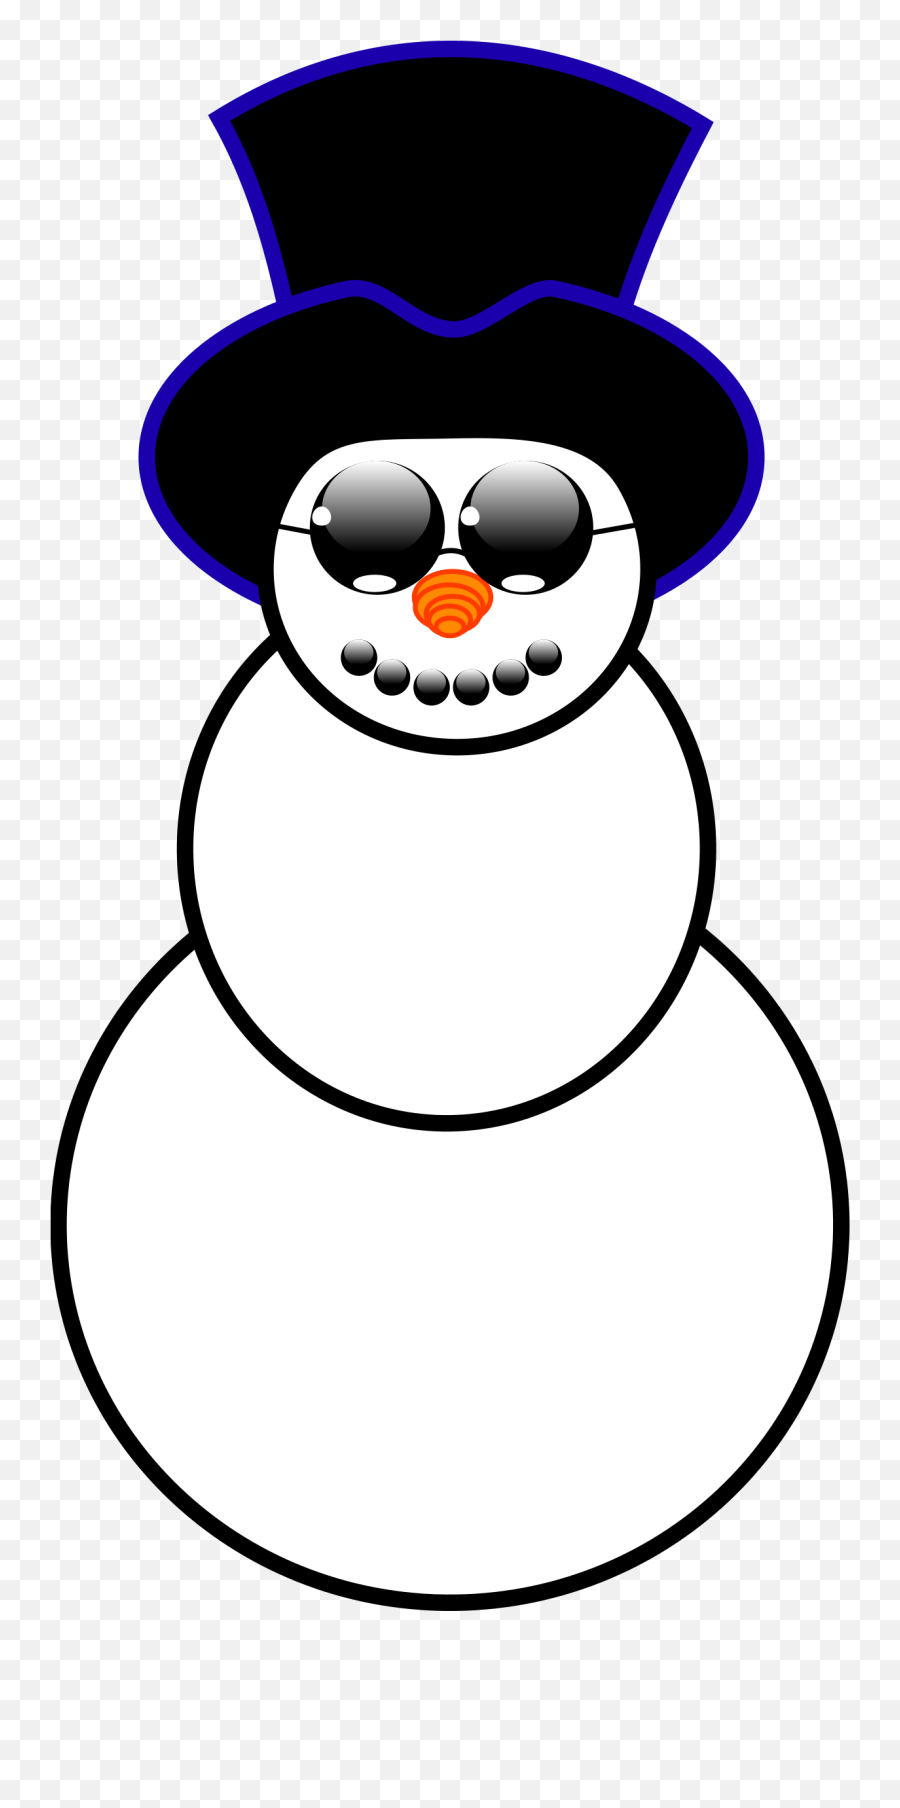 Snowman Clipart By Hextrust - Snowman With Sunglasses Clipart Png,Snowman Clipart Transparent Background